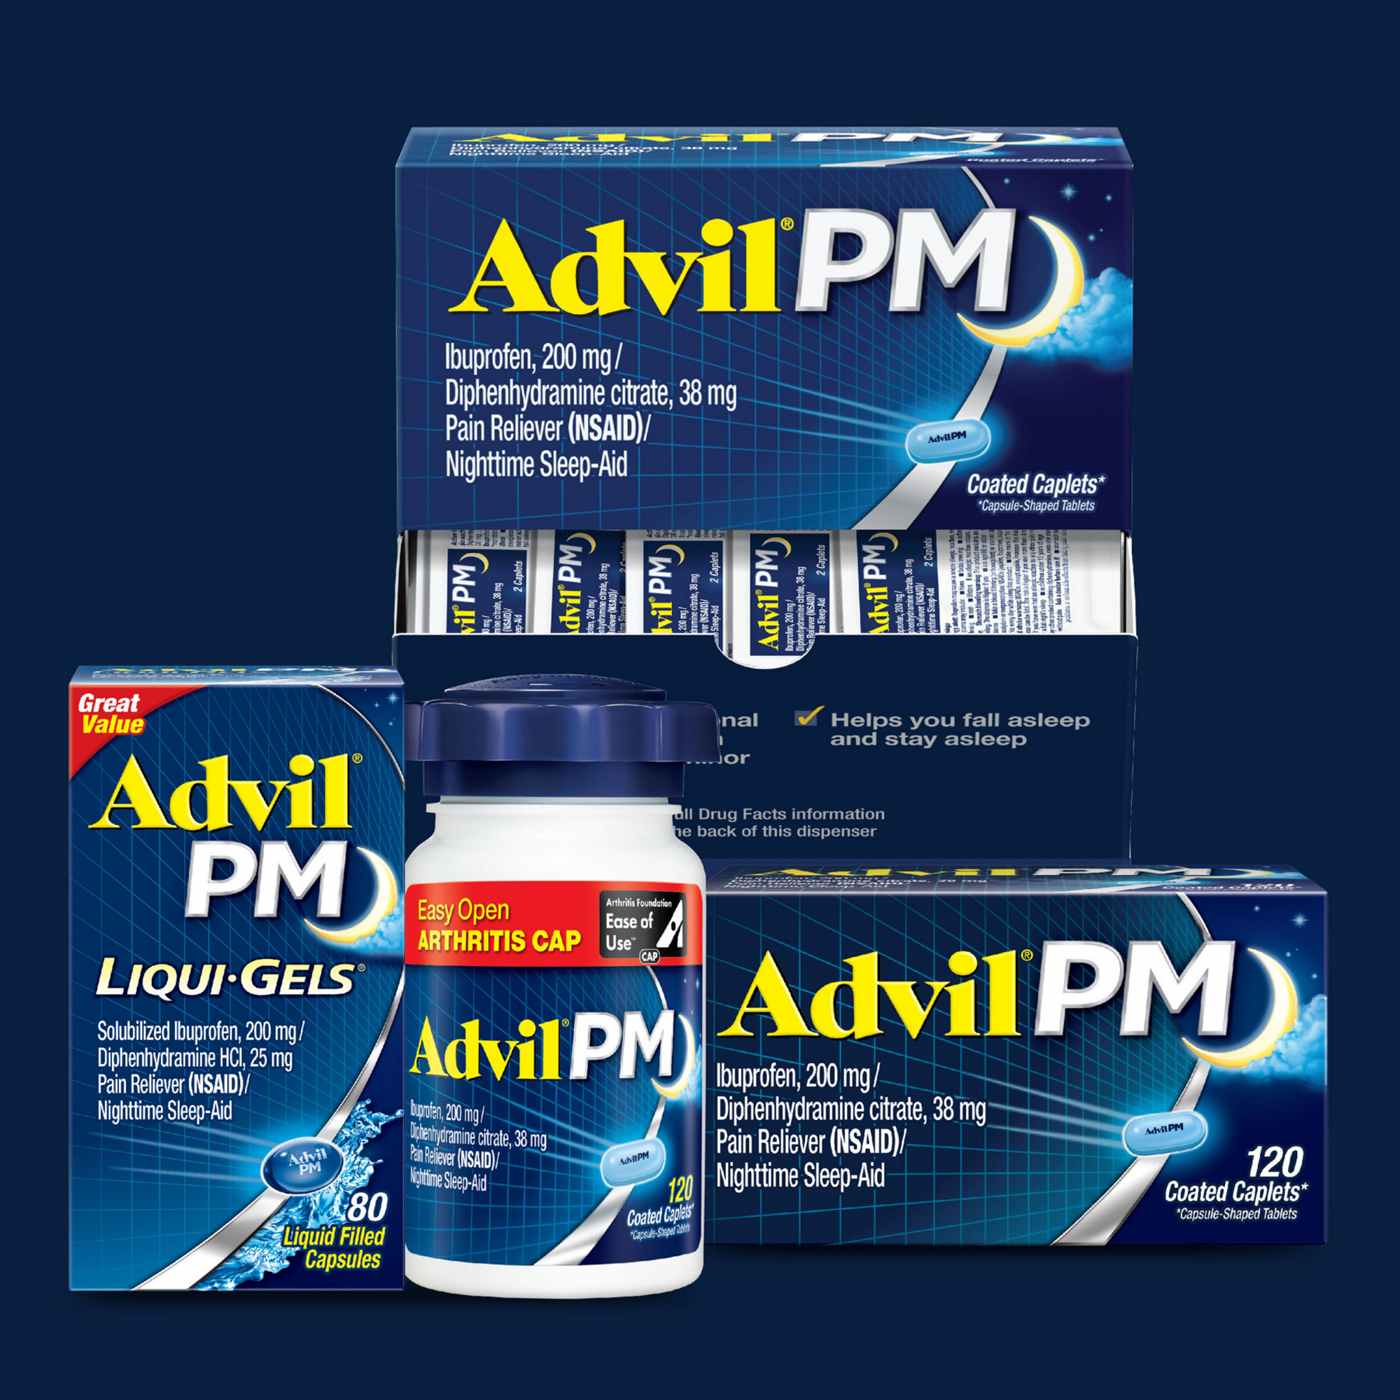 Advil PM Liqui-Gels Pain Reliever & Nighttime Sleep Aid Liquid Filled Capsules; image 4 of 8